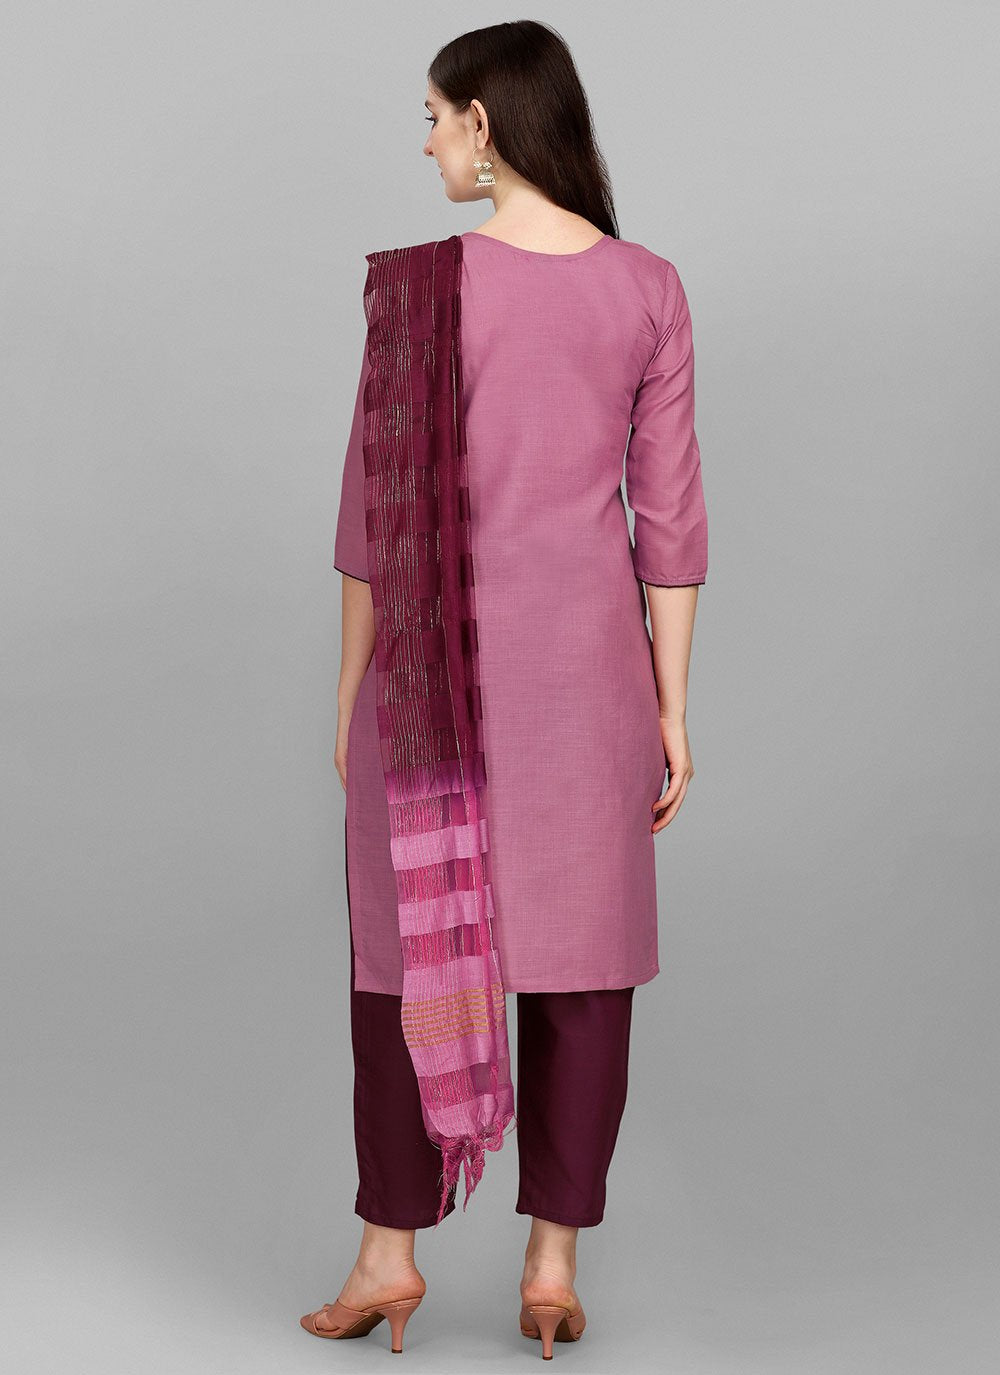 Salwar Suit Cotton Pink Embroidered Salwar Kameez